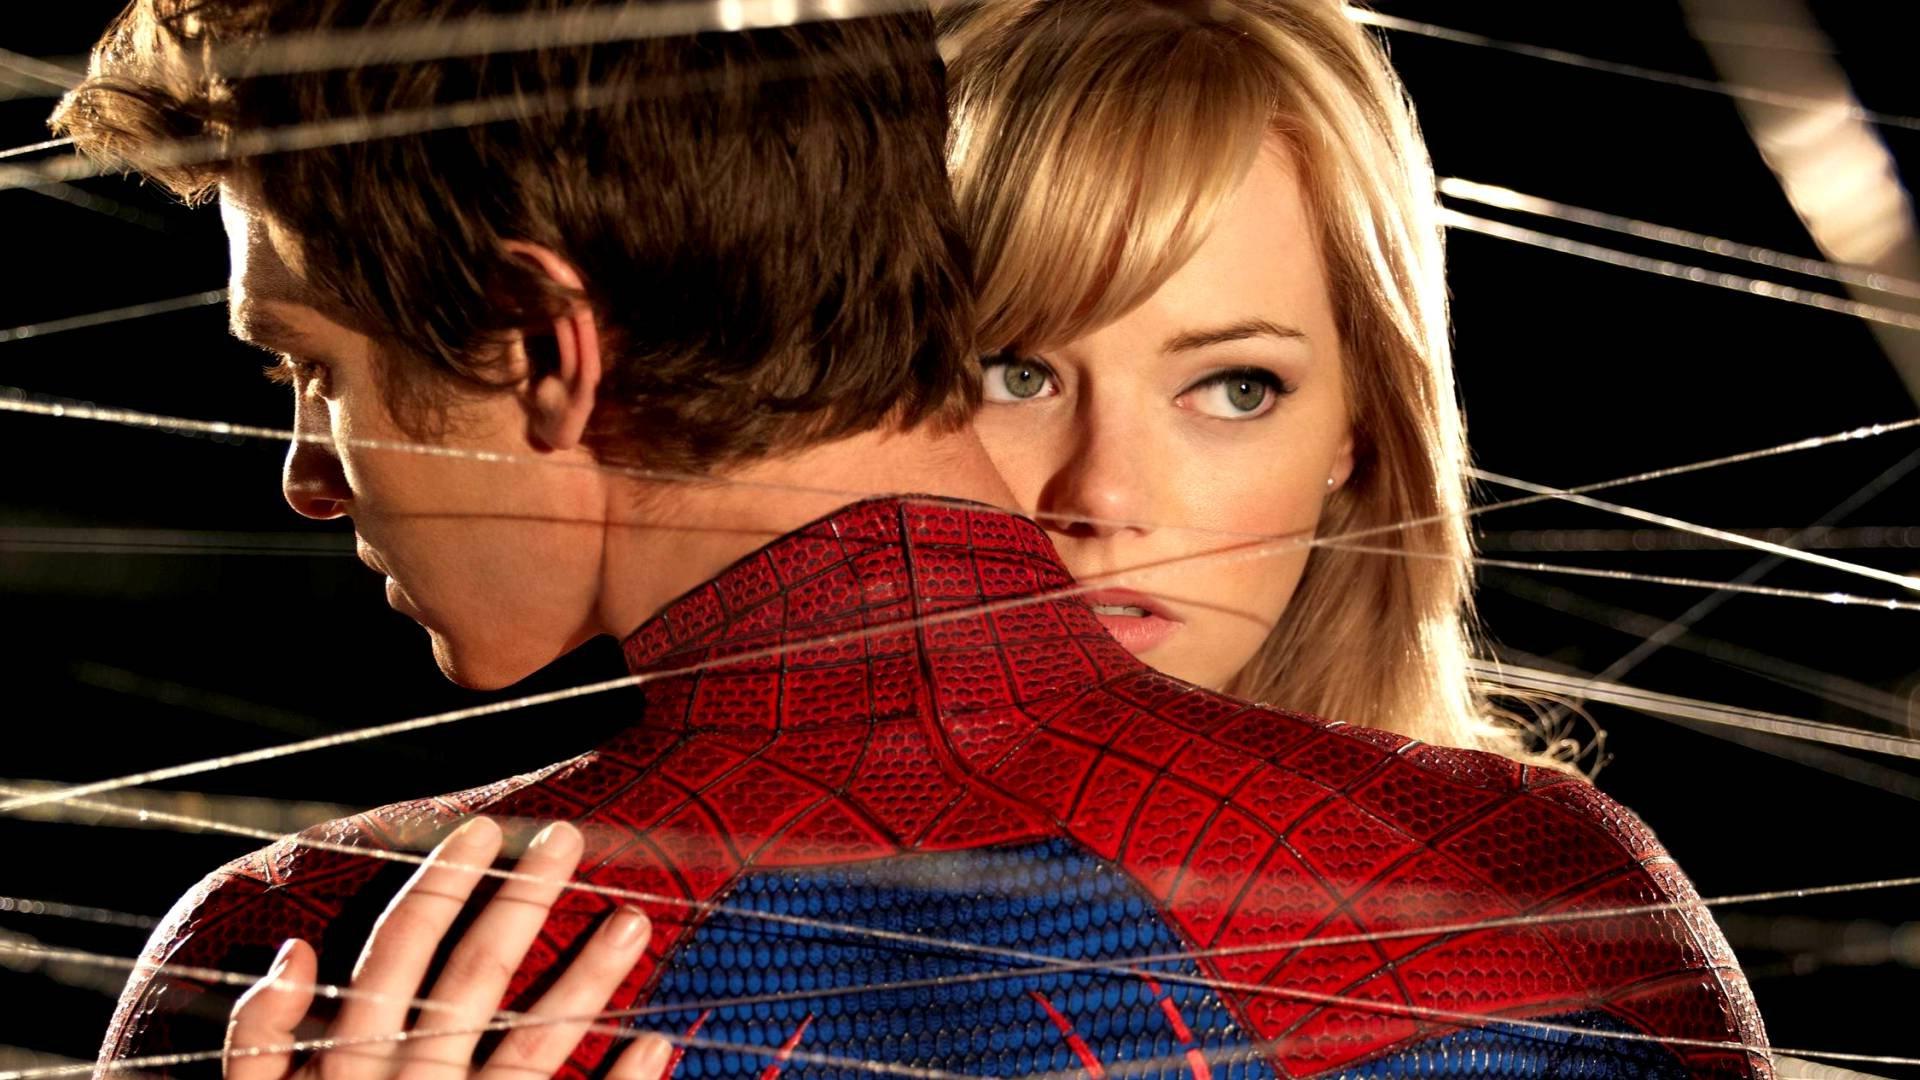 Amazing Spider Man Action Adventure Fantasy Ics Movie